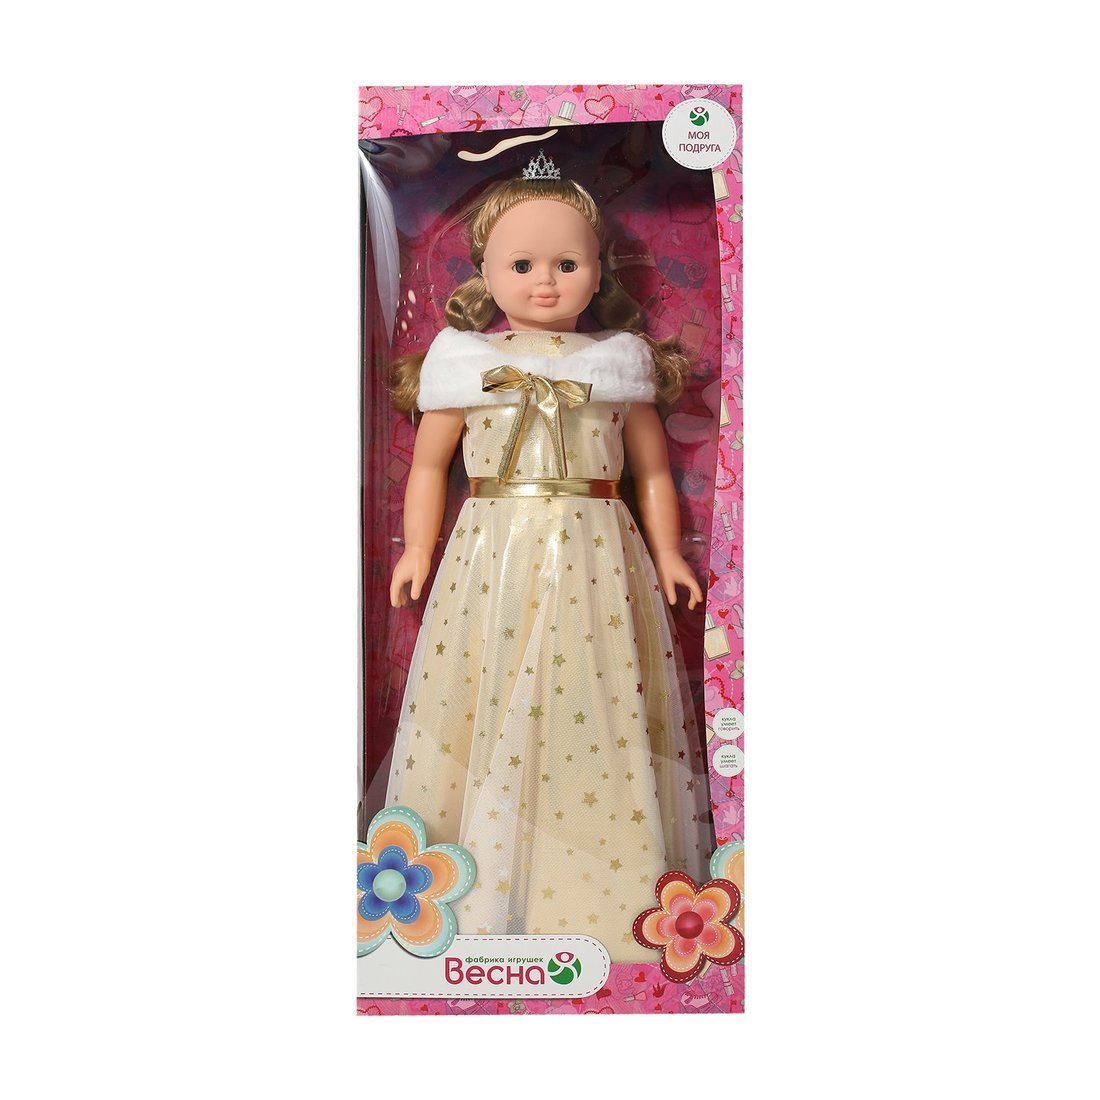 Картинка Кукла Снежана модница 2 83 см Артикул В4138/о-540